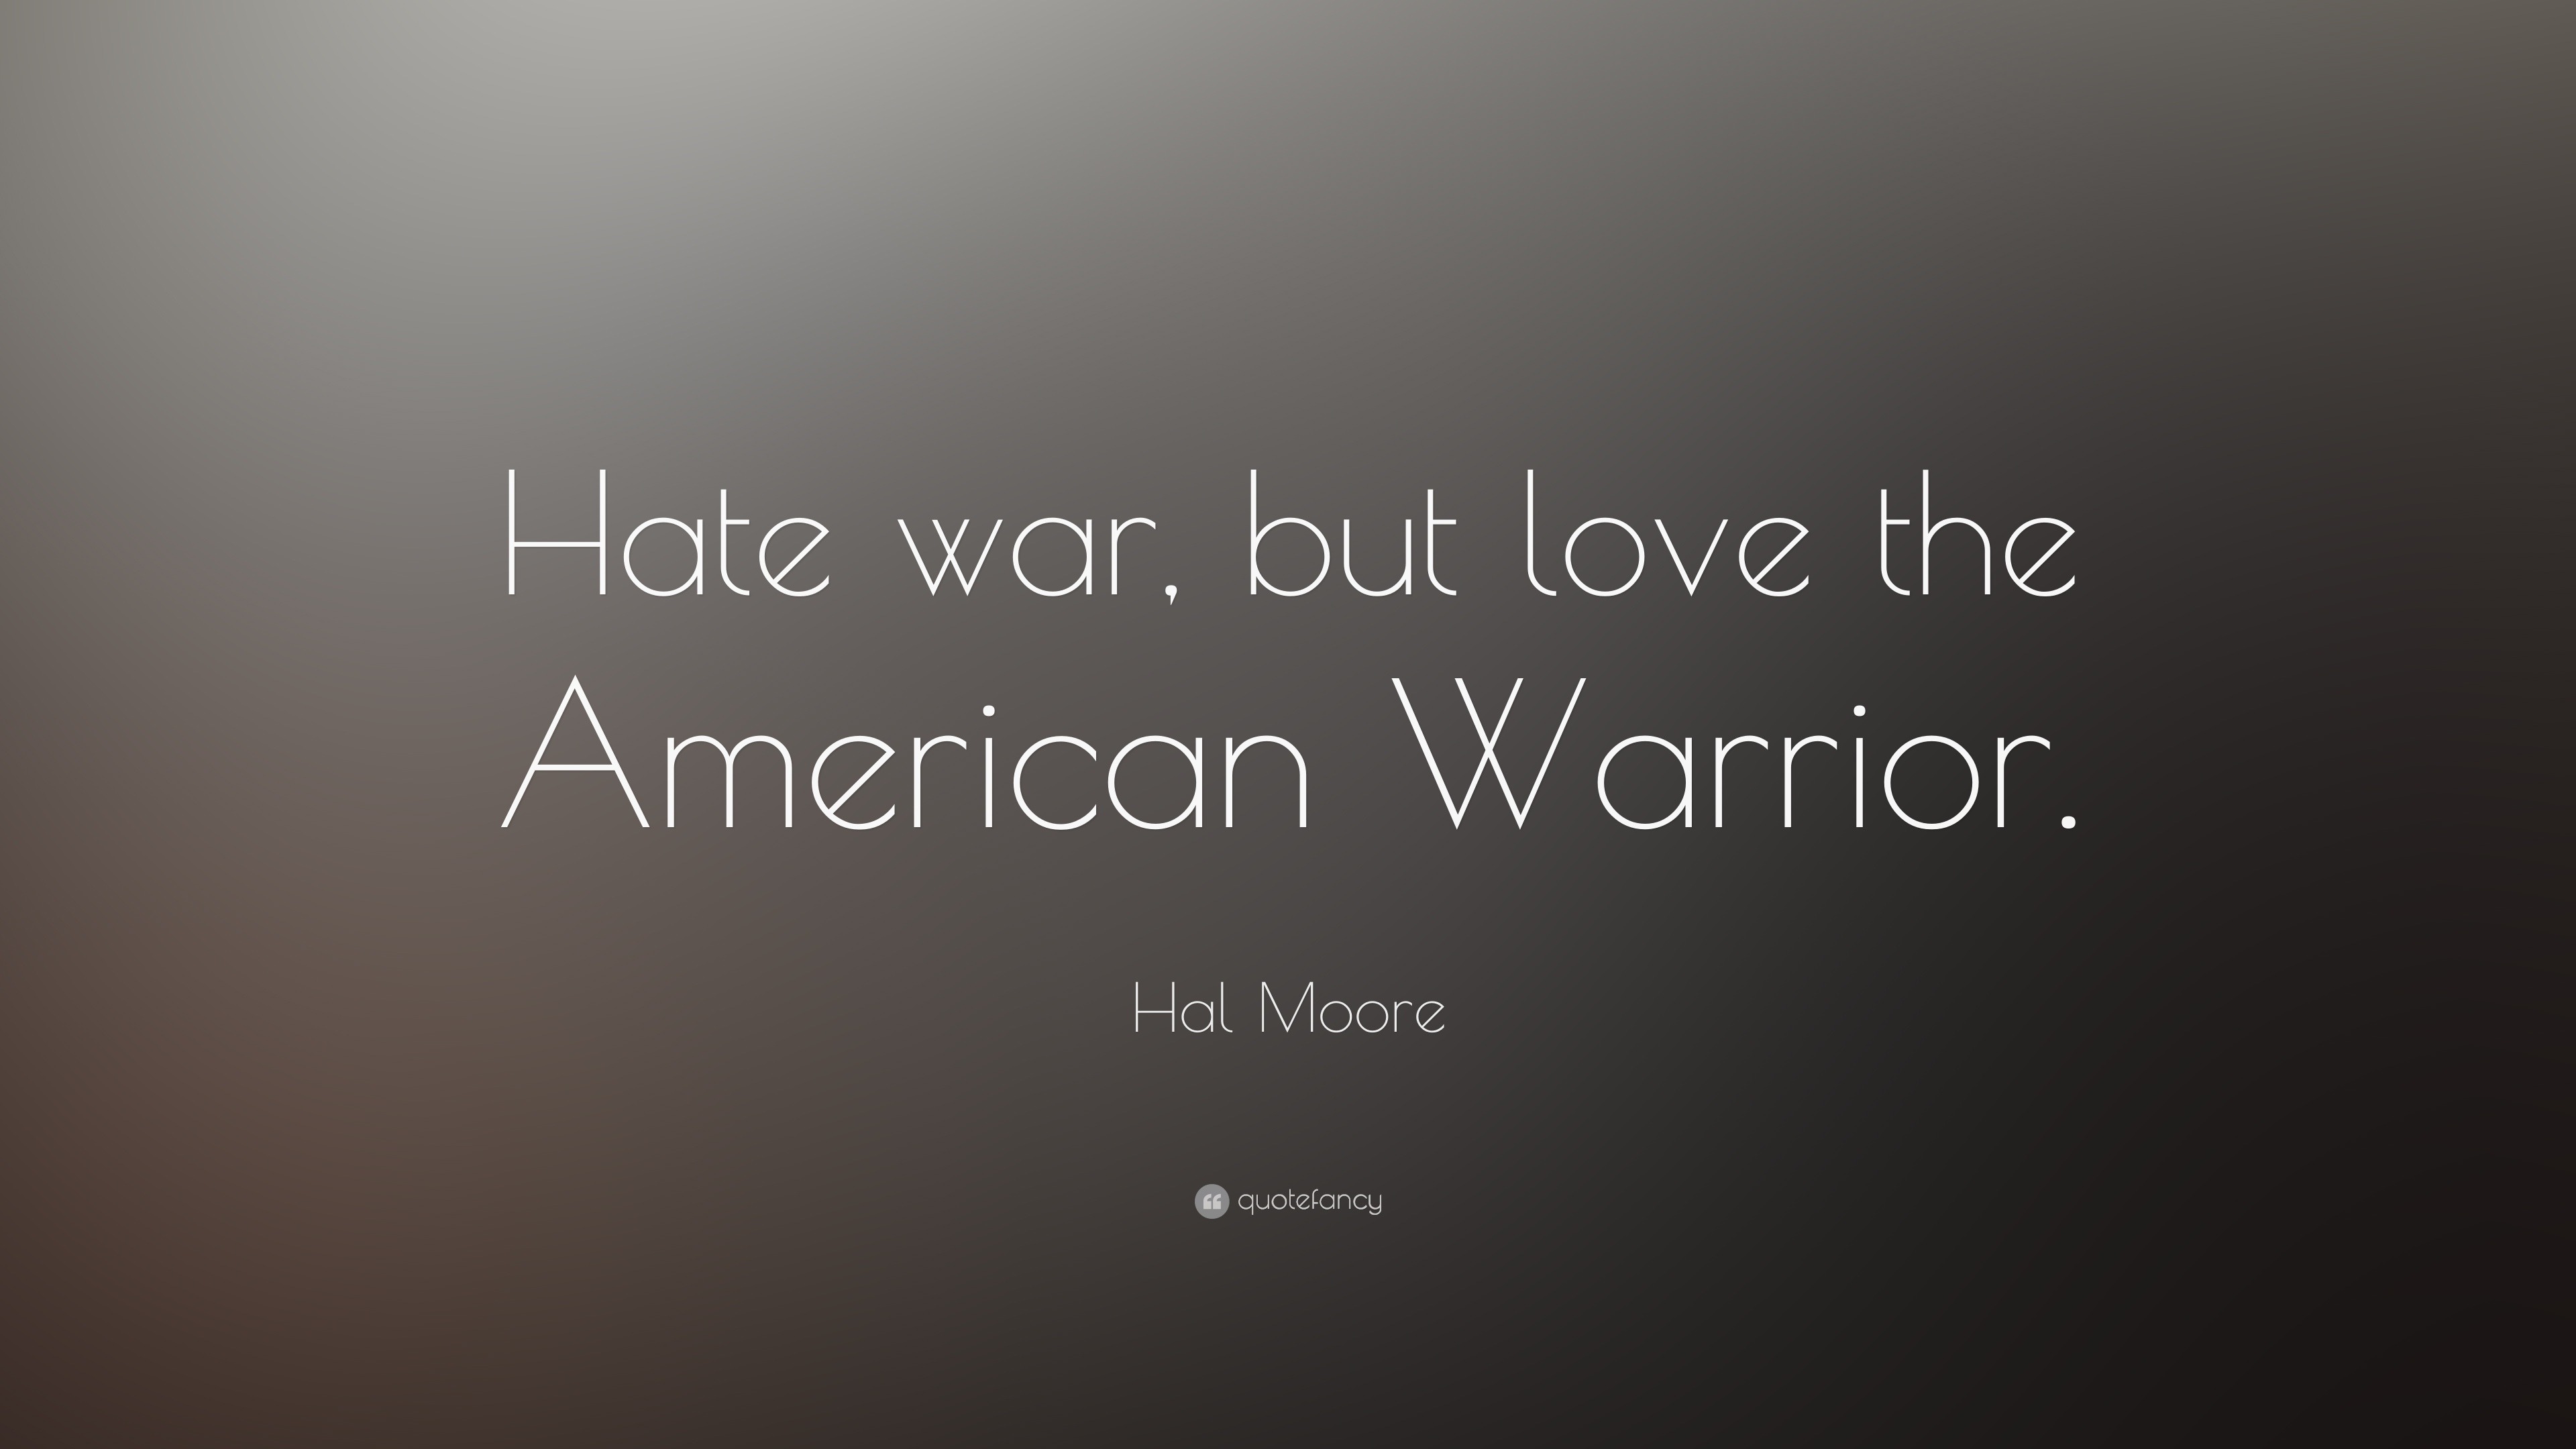 warrior quotes wallpaper